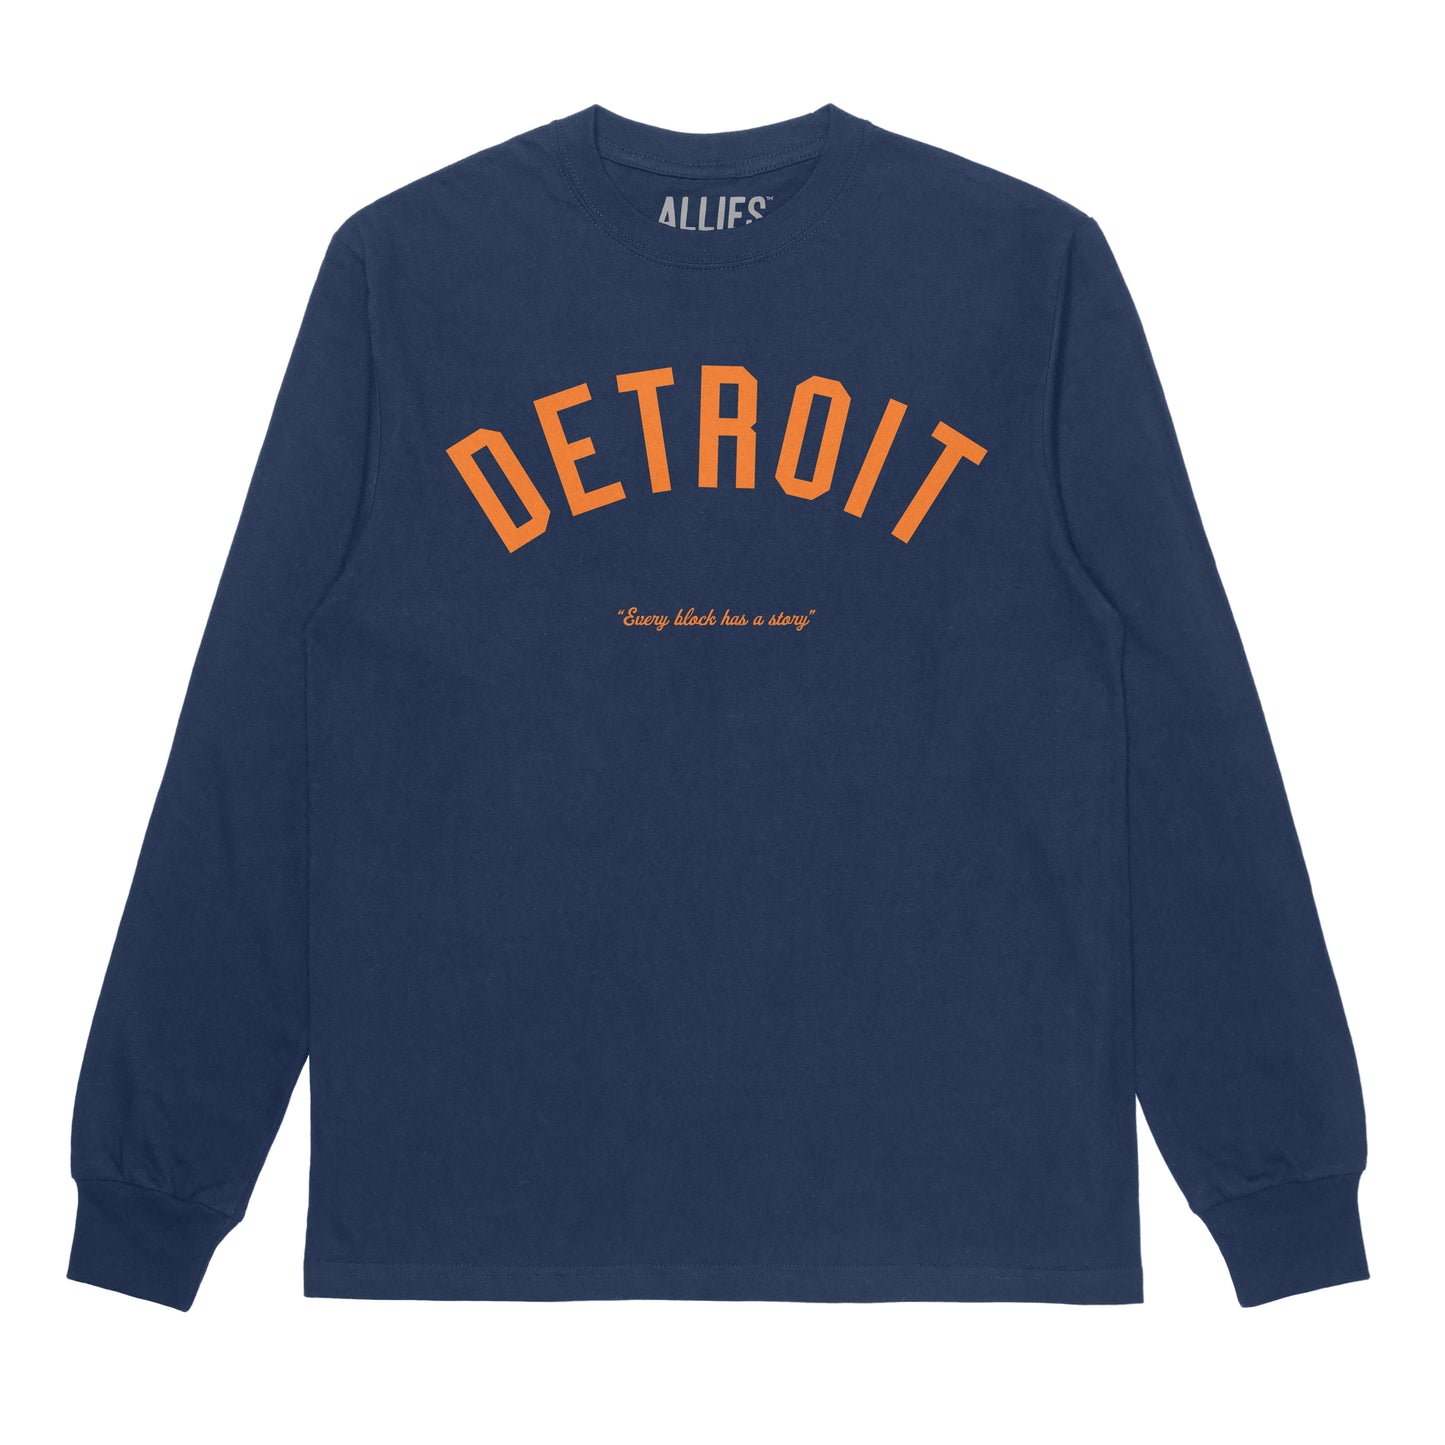 Detroit Story T-shirt